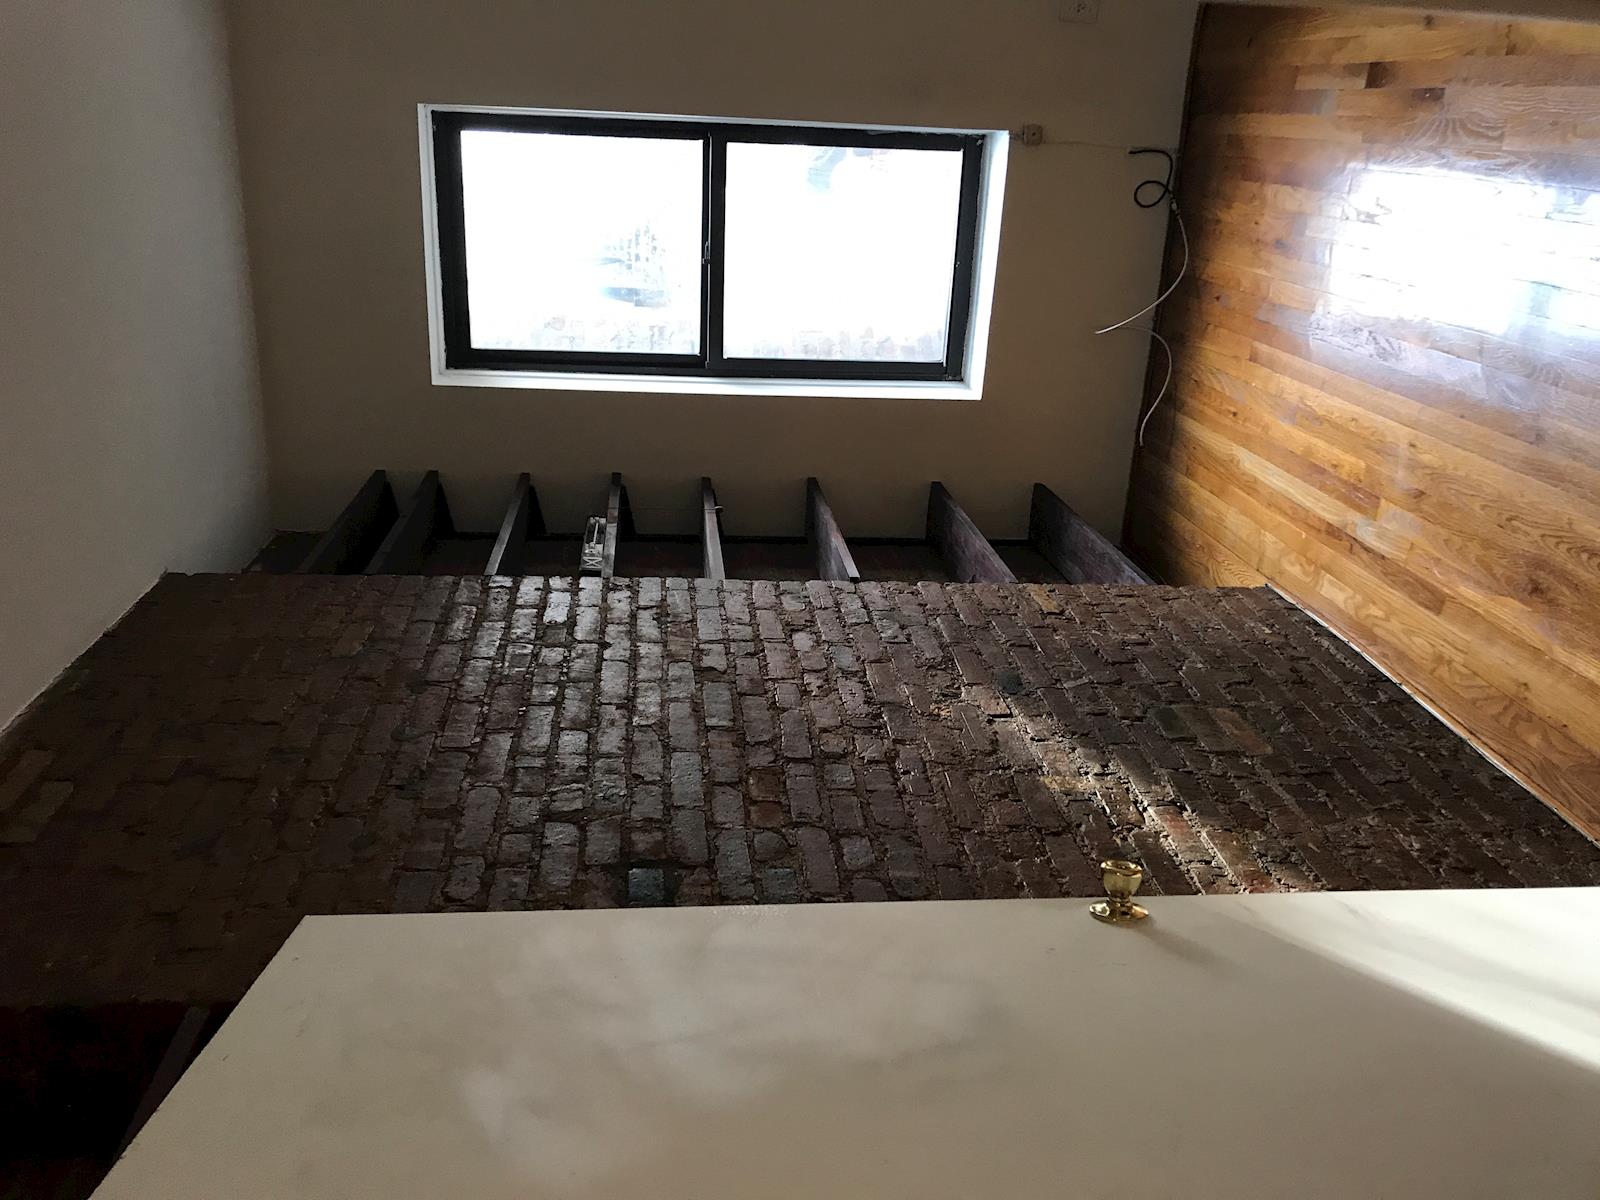 a view of wooden floor in an empty room